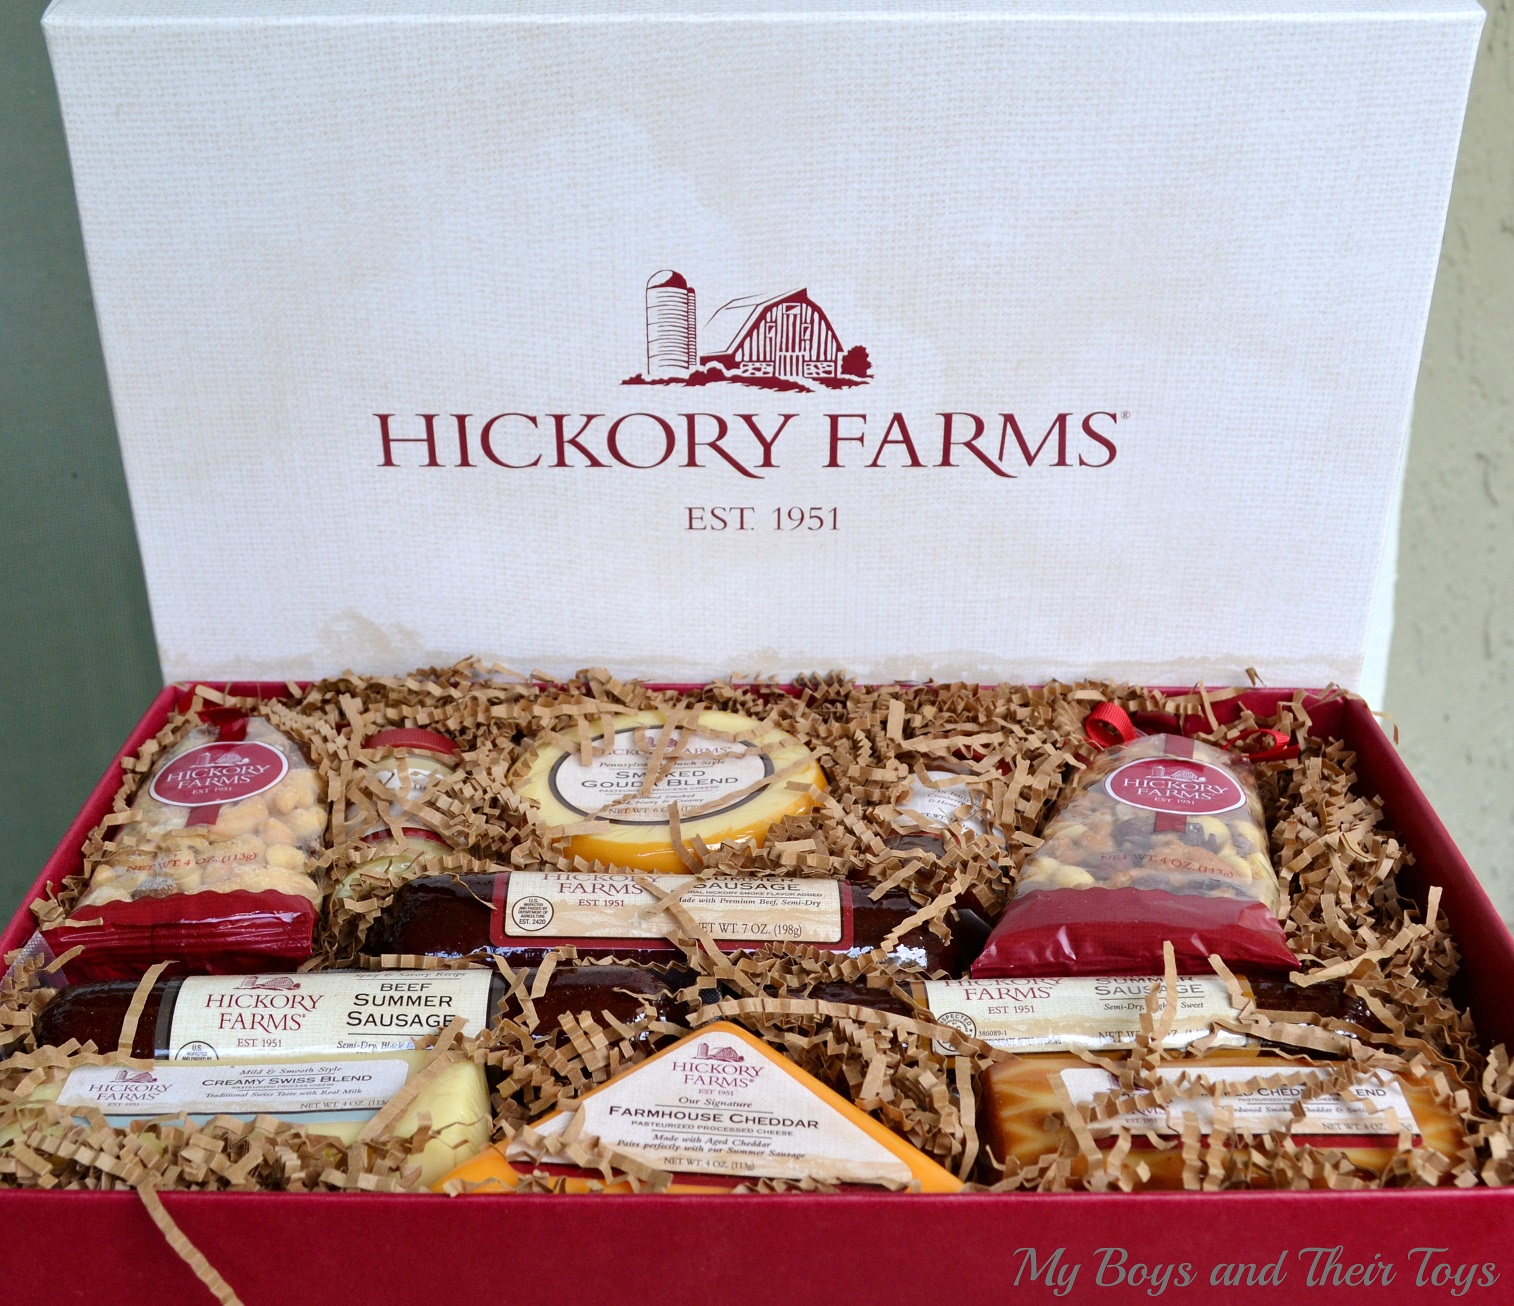 https://myboysandtheirtoys.com/wp-content/uploads/2013/11/Hickory-Farms-gift-box.jpg